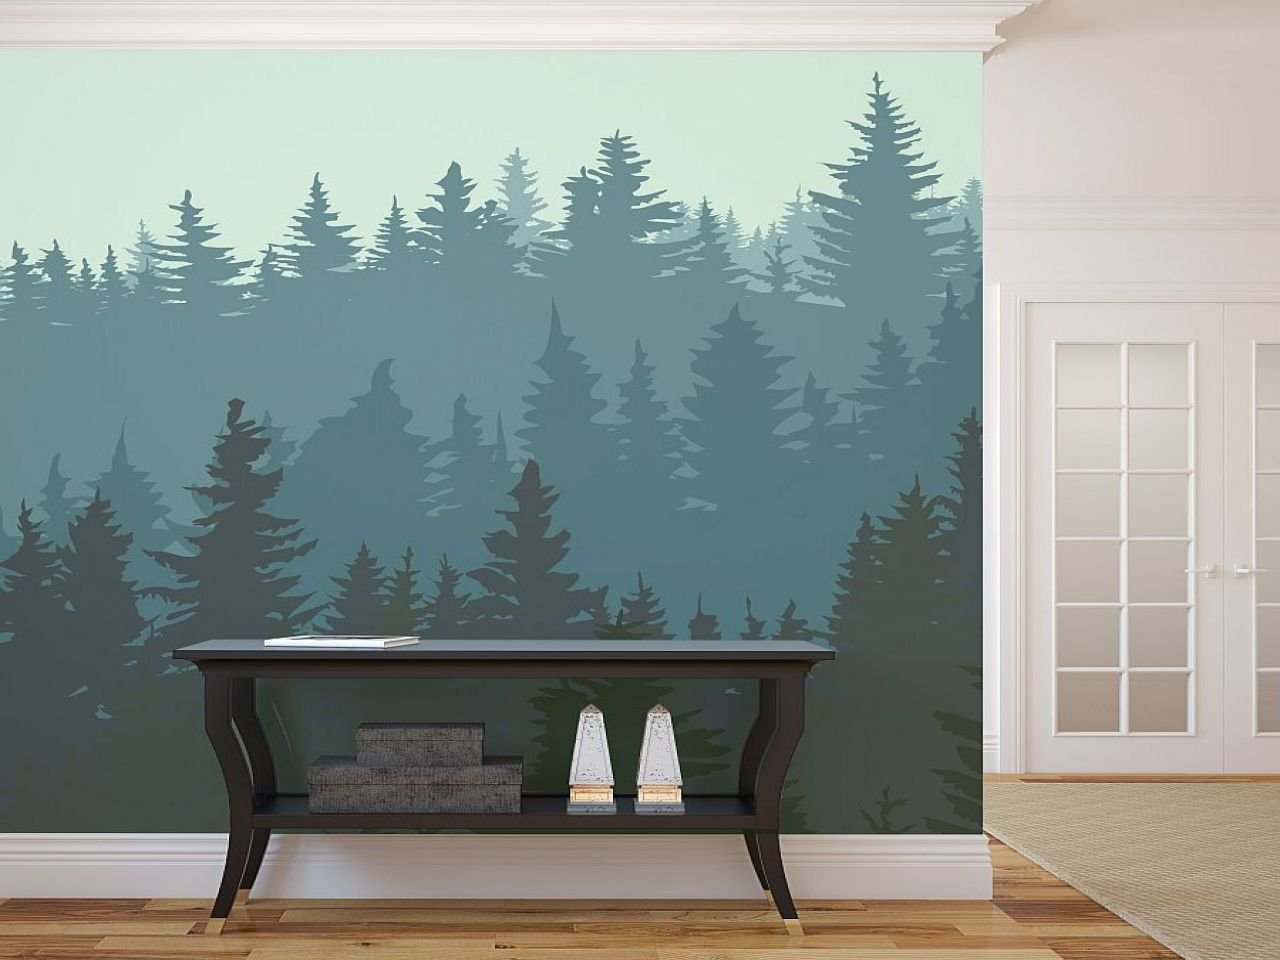 Обои на стену лес. Пейзаж на стене. Роспись стен в интерьере. Лес на стене в интерьере. Роспись стен лес.